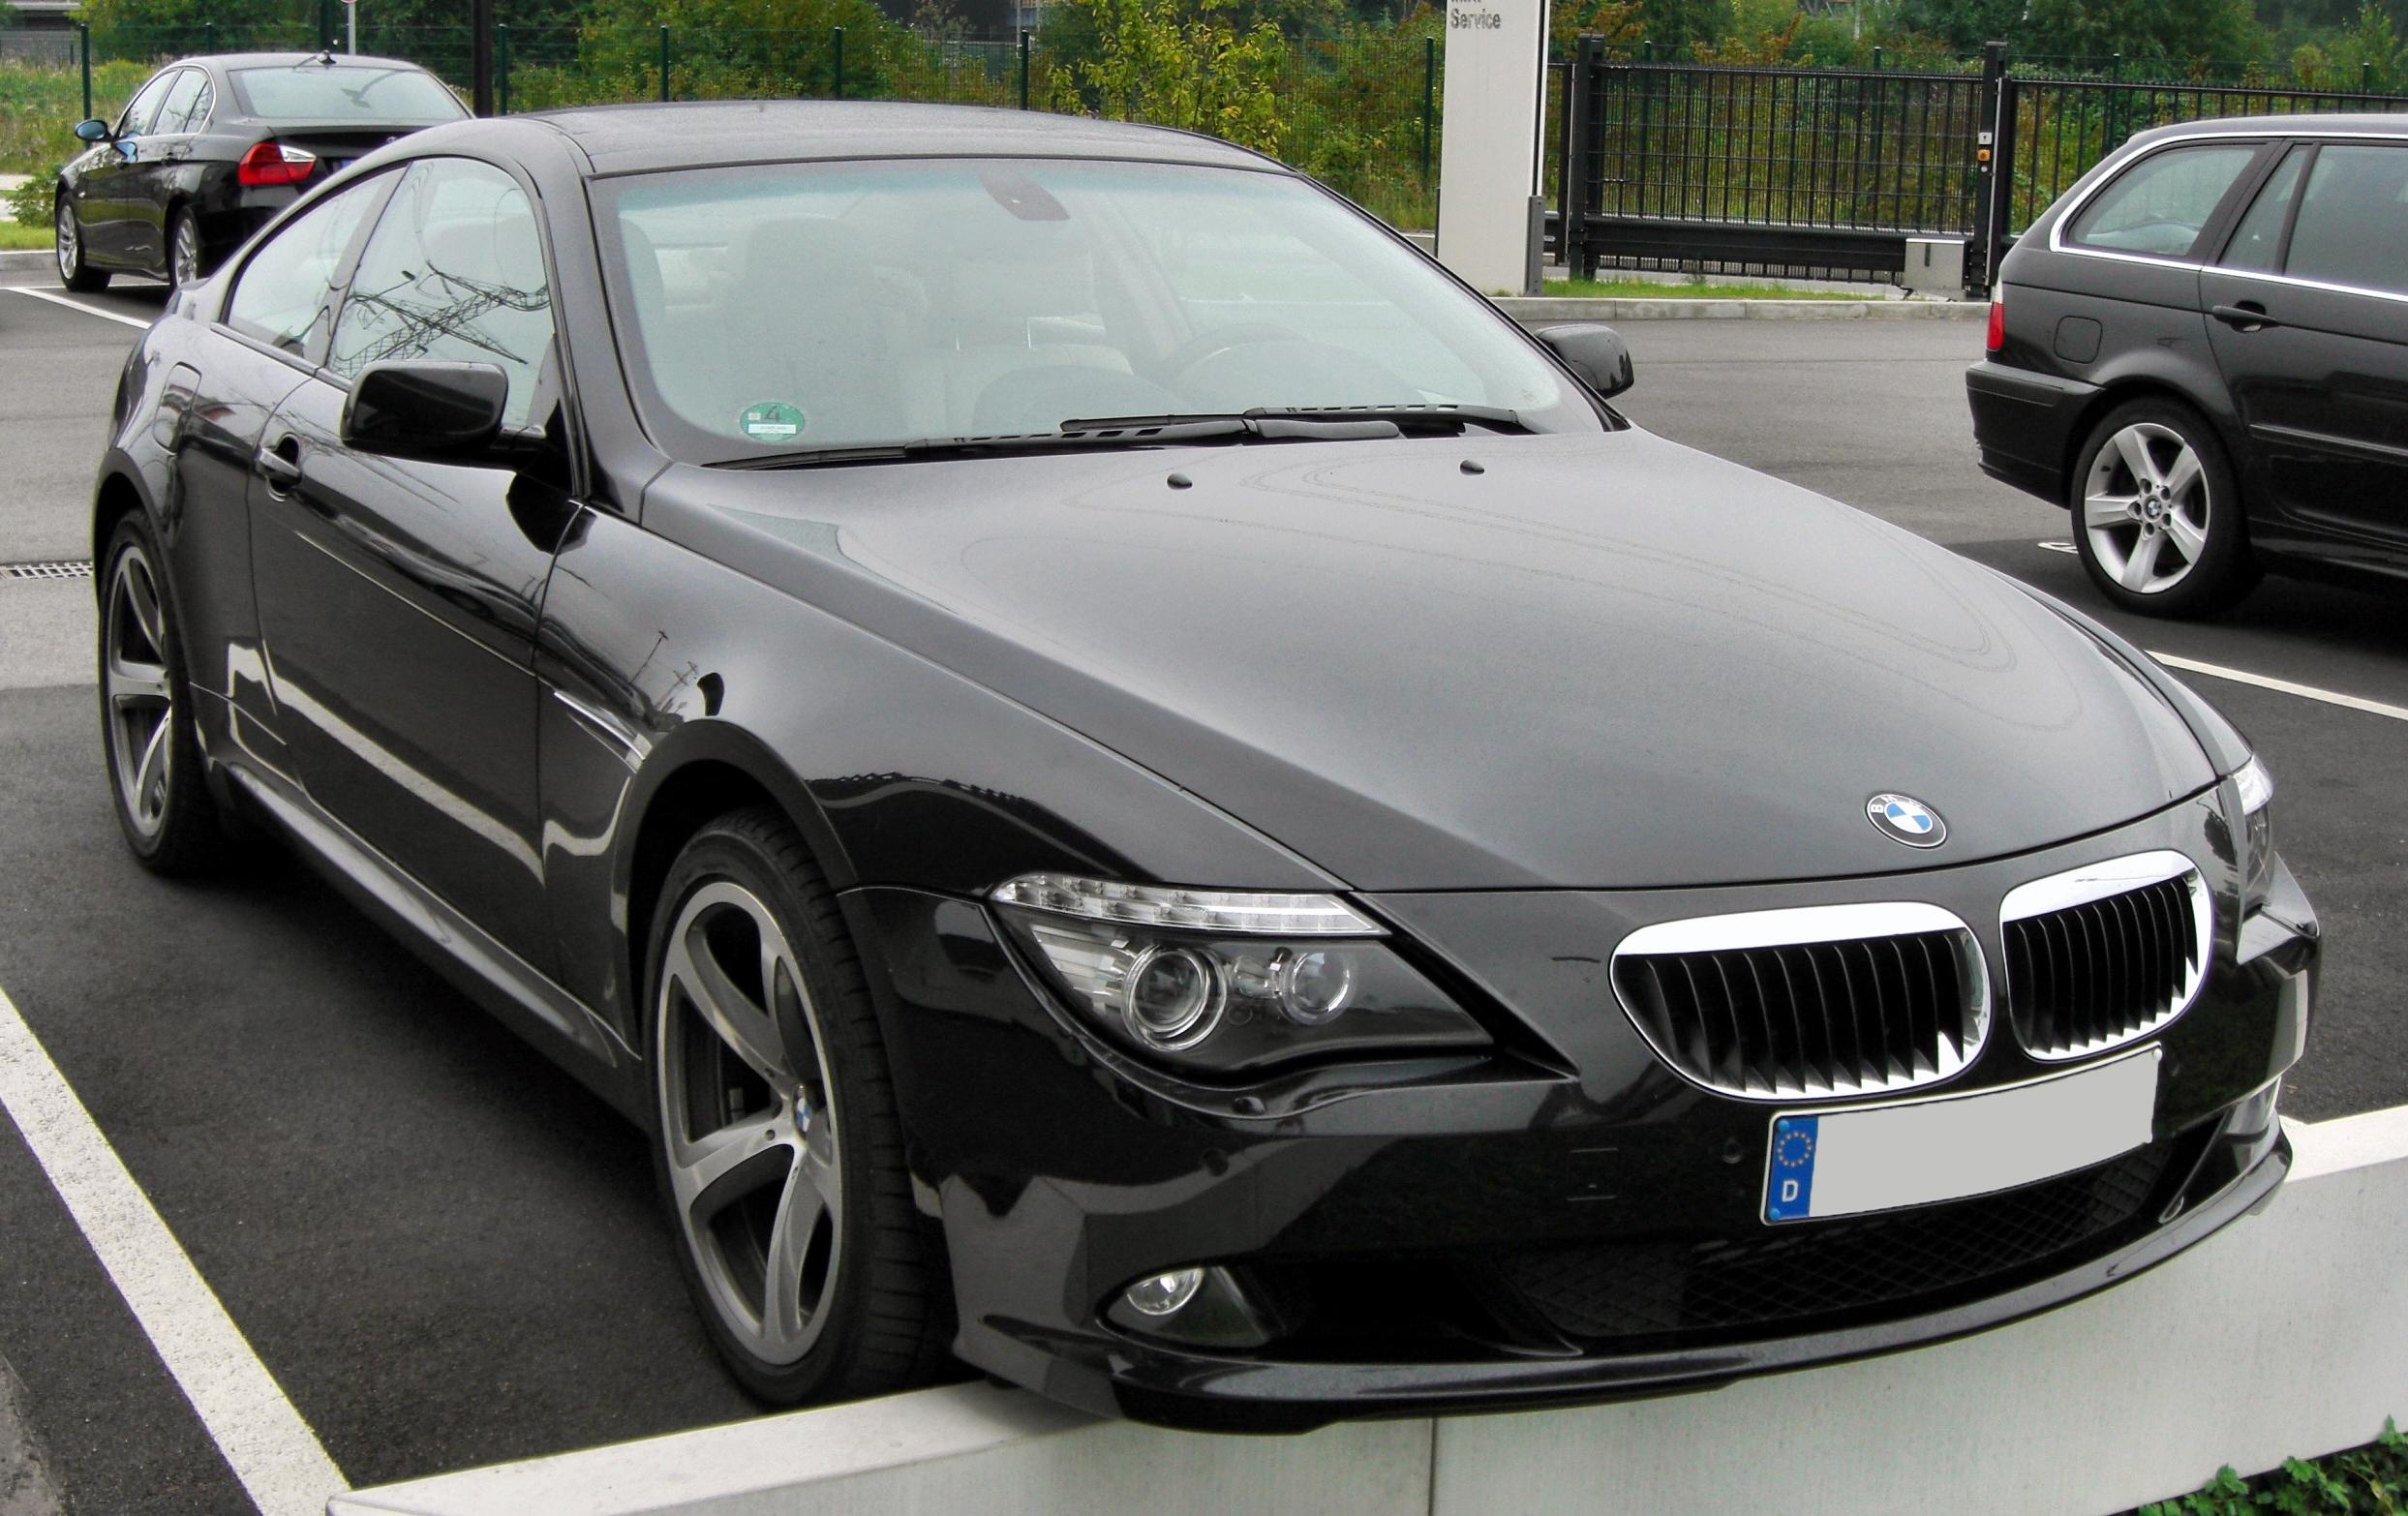 BMW 6 Backgrounds, Compatible - PC, Mobile, Gadgets| 2487x1566 px